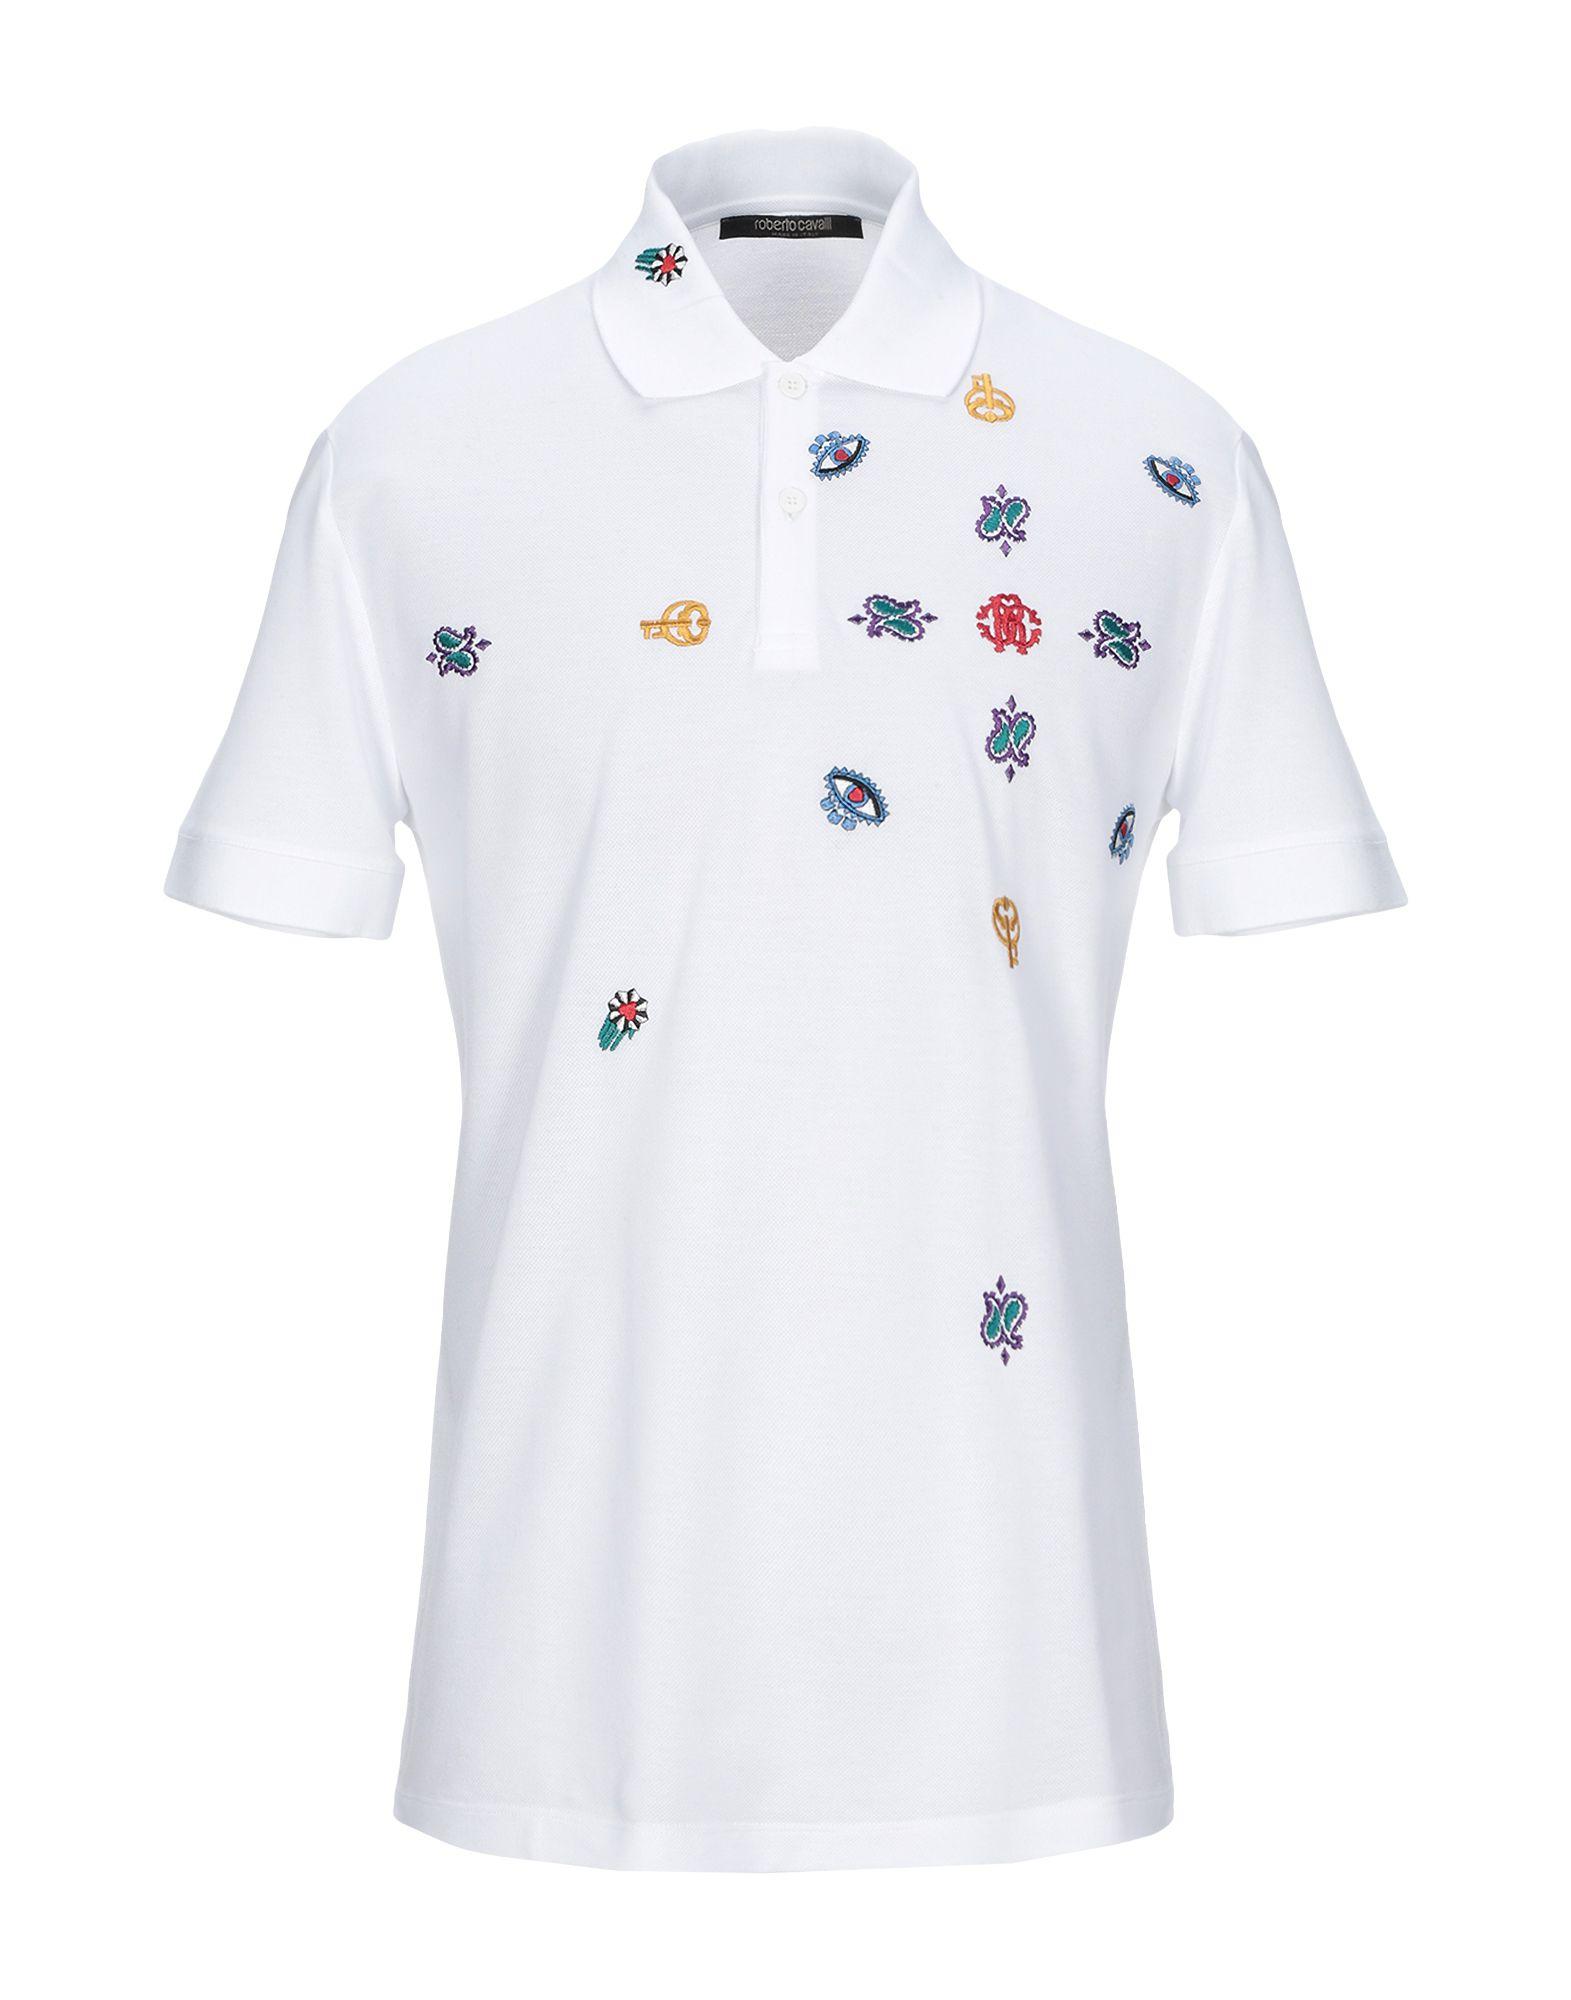 Roberto Cavalli Cotton Polo Shirt in White for Men - Lyst